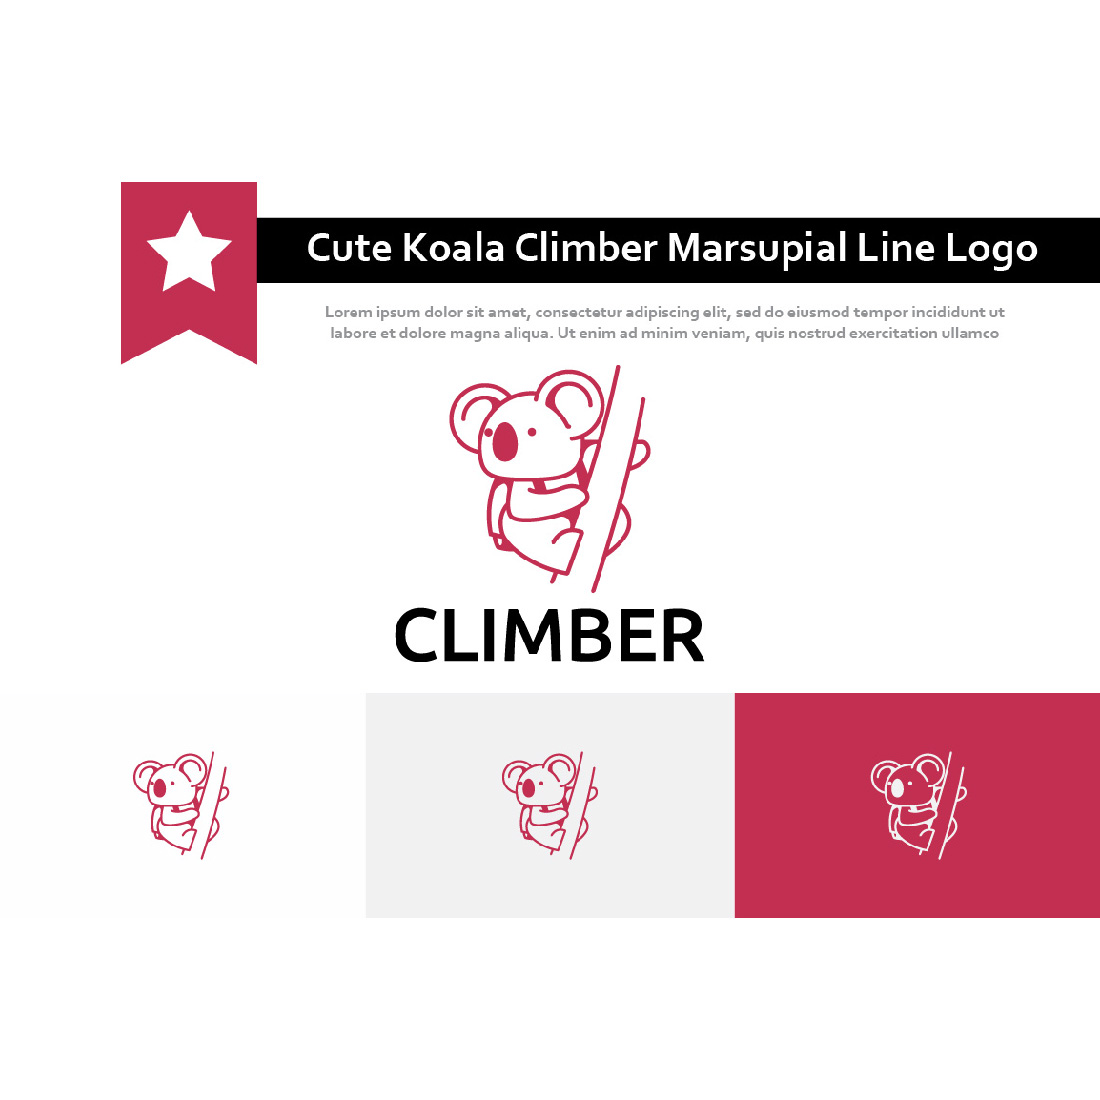 Cute Koala Climber Marsupial Animal Nature Line Logo.